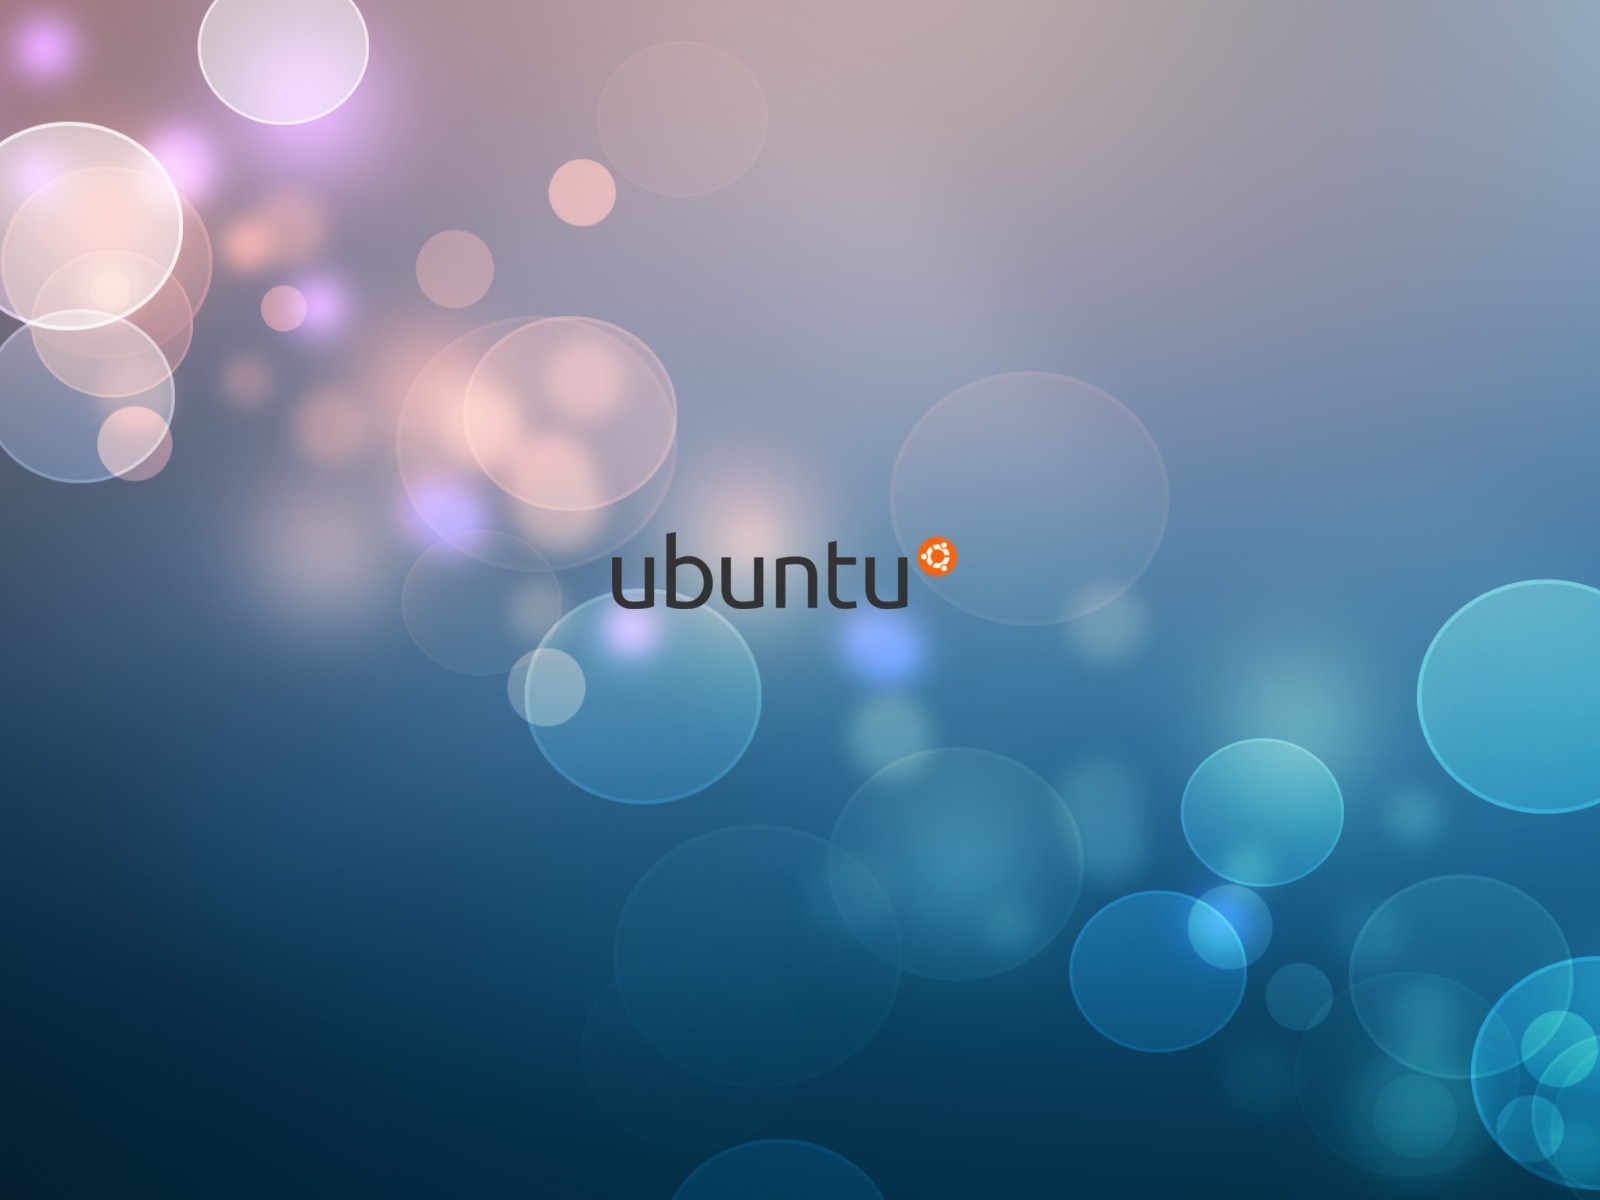 Ubuntu Minimalistic for 1600 x 1200 resolution